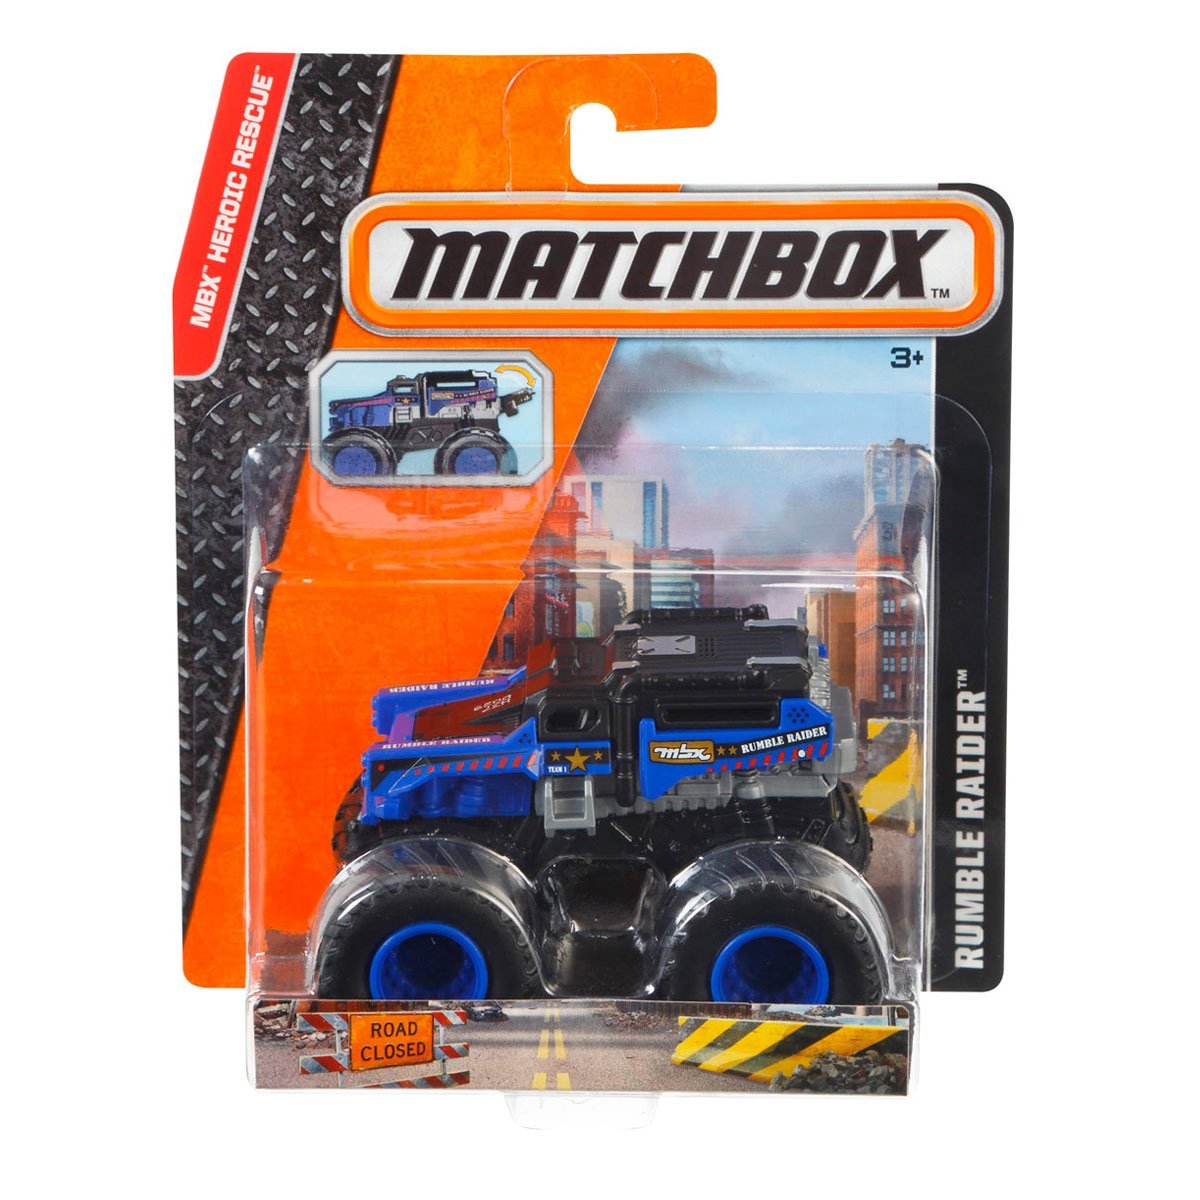 Matchbox Camiones Surtido1:64